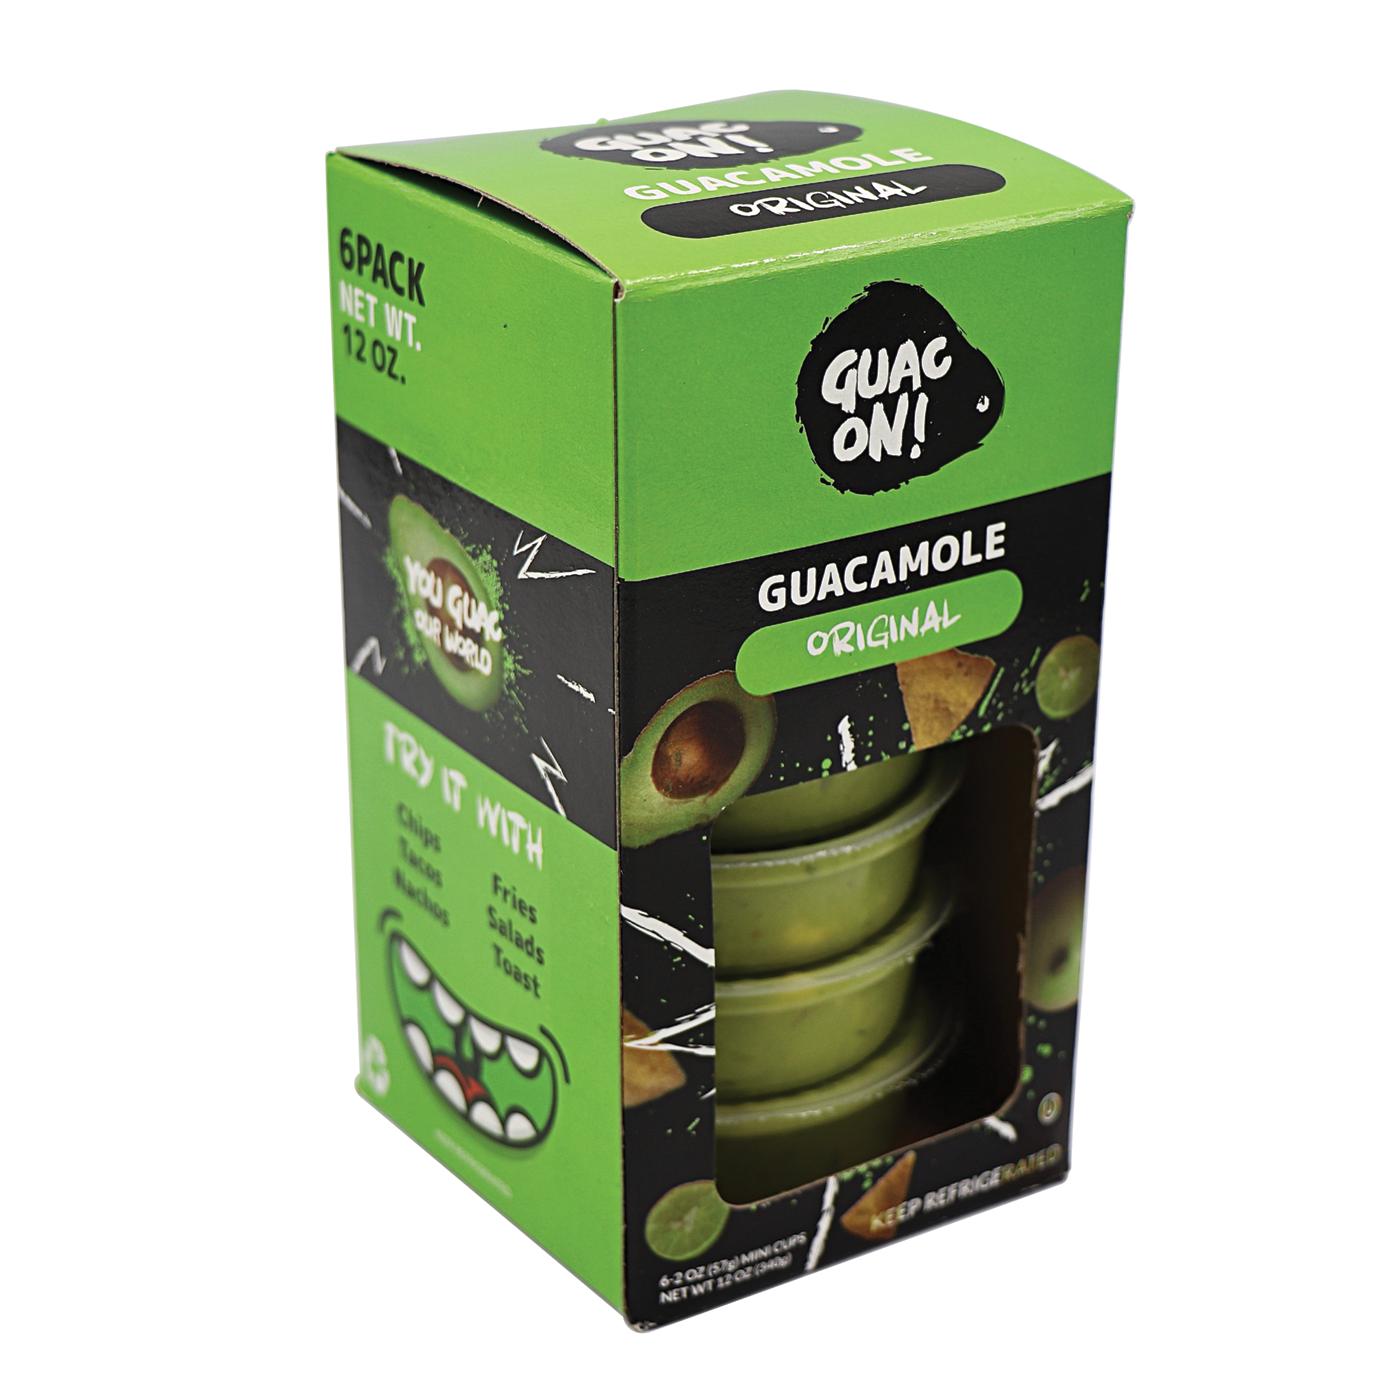 Guac On! Original Guacamole Mini Cups; image 3 of 3